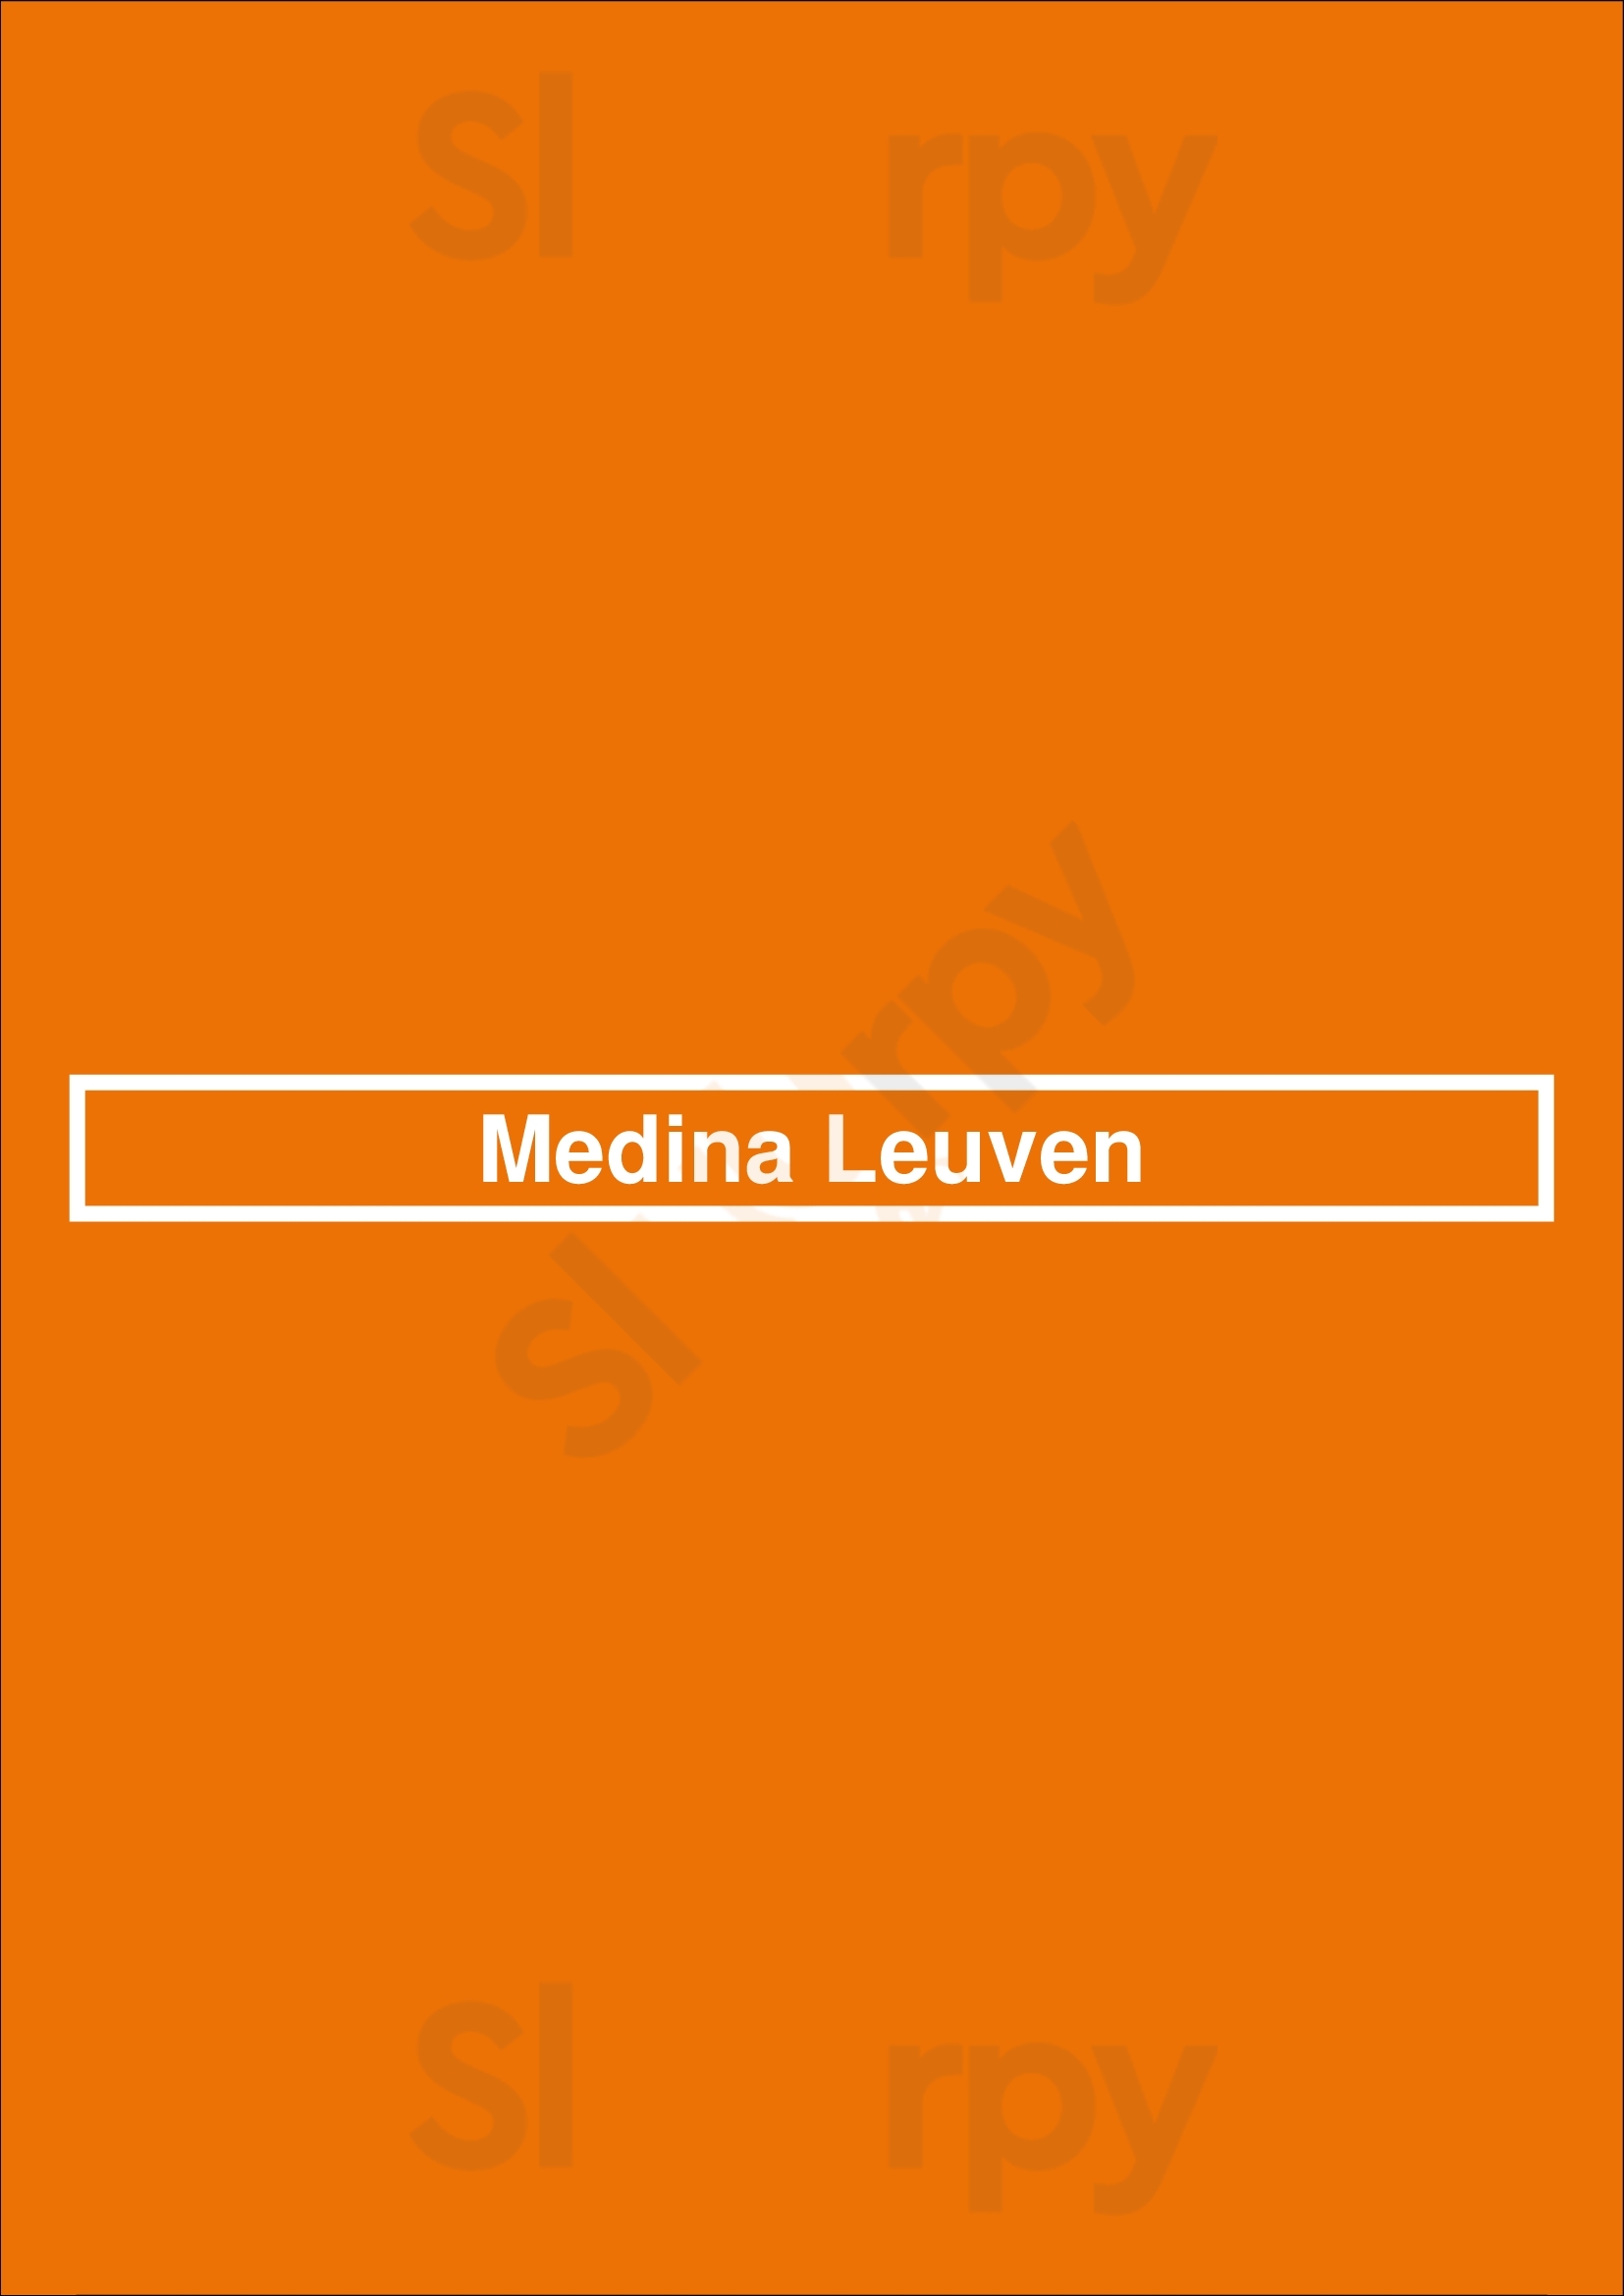 Medina Leuven Louvain Menu - 1